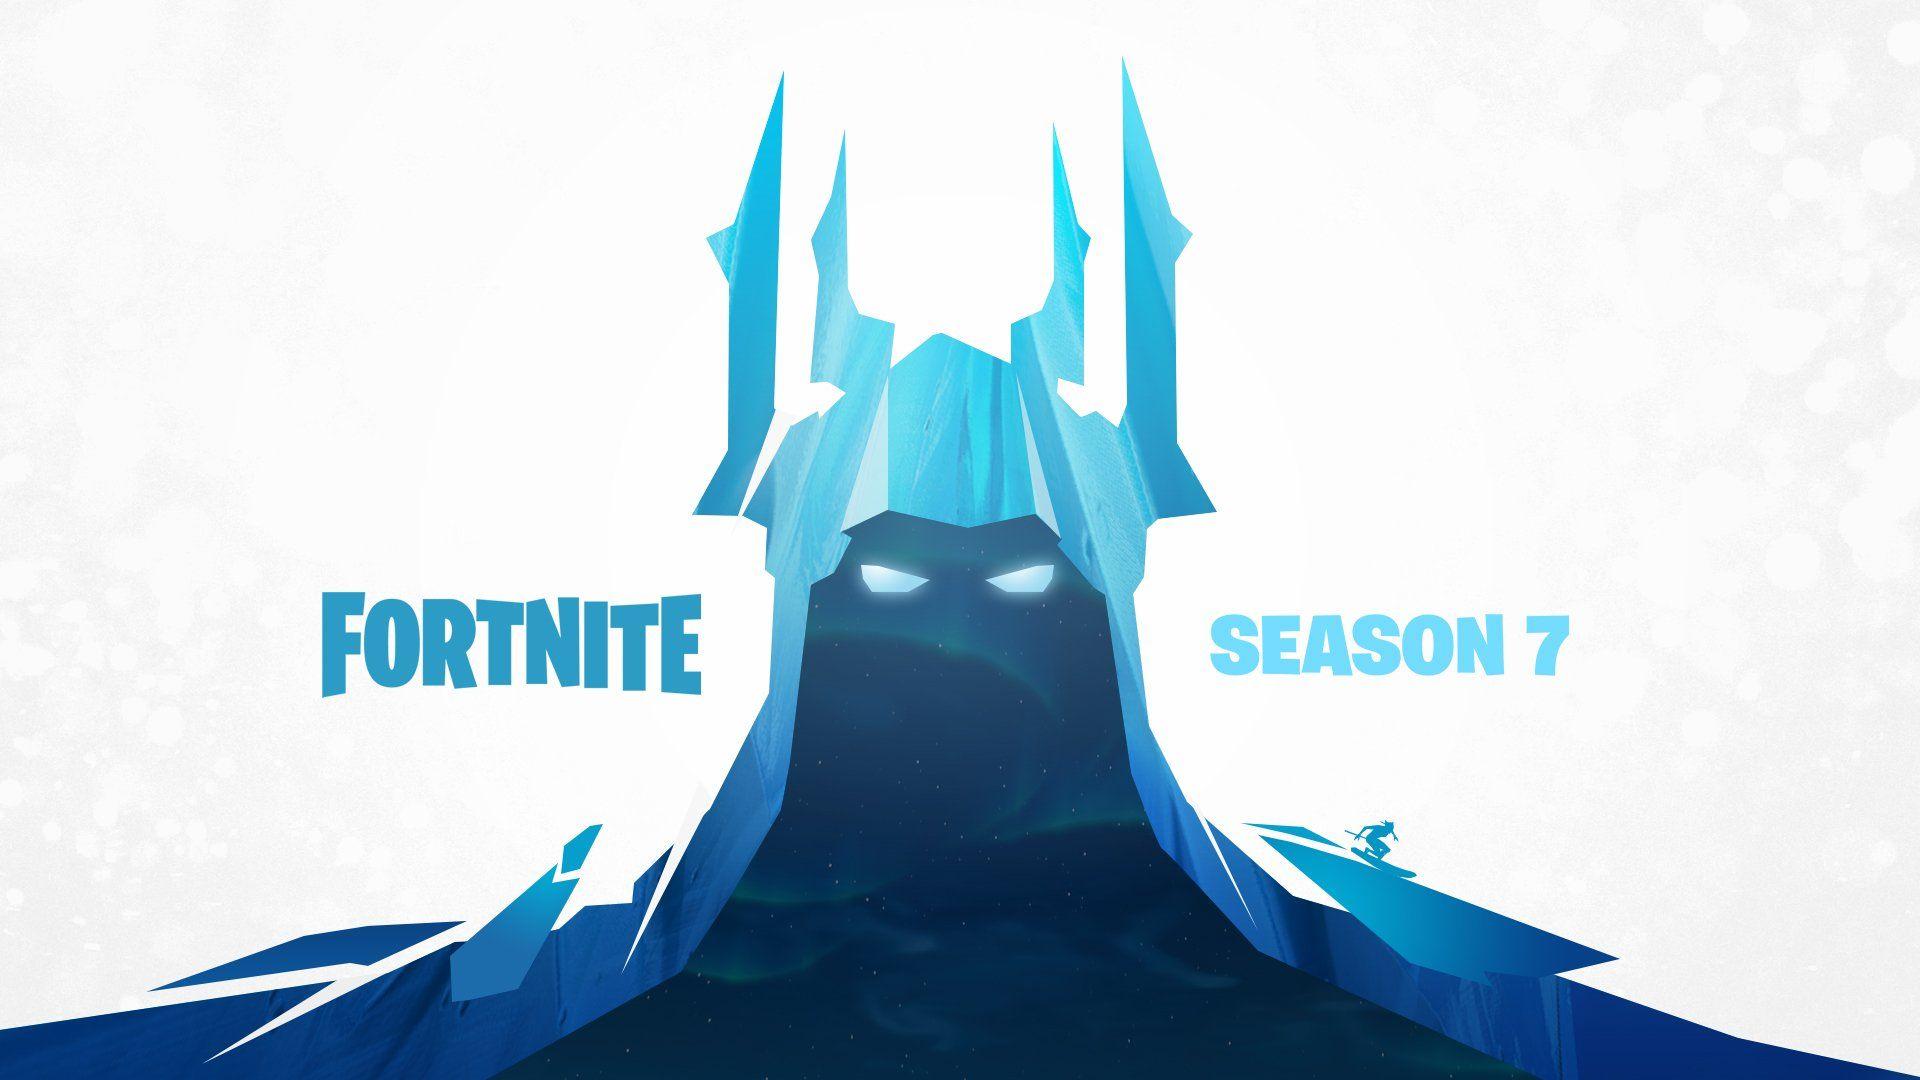 Cool Fortnite Logo - Fortnite Season 7: Battle Pass, release date, new skins, map changes